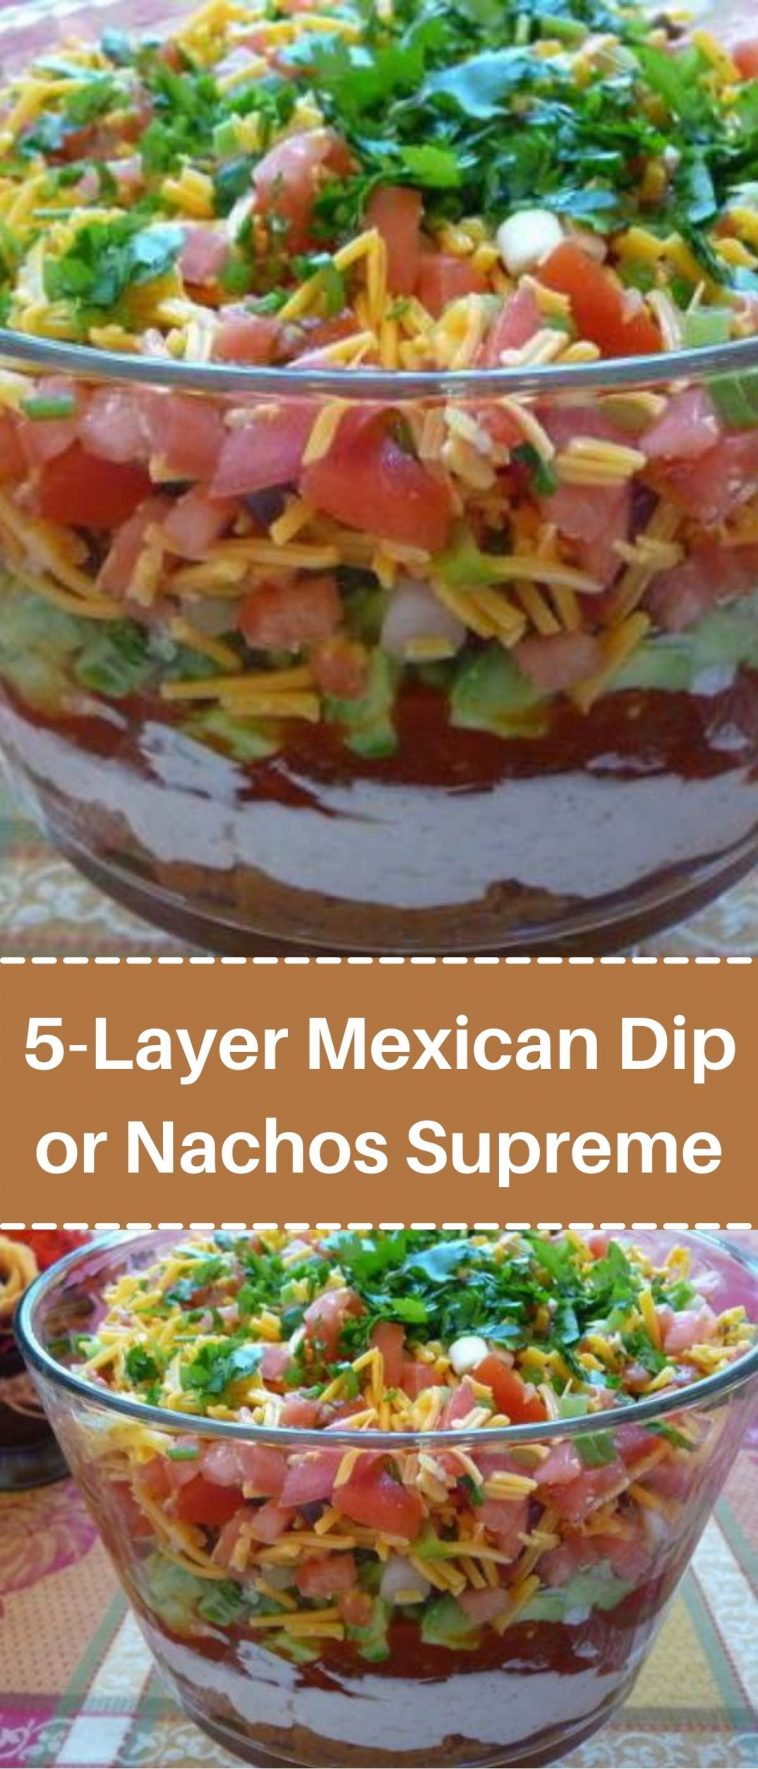 5-Layer Mexican Dip or Nachos Supreme